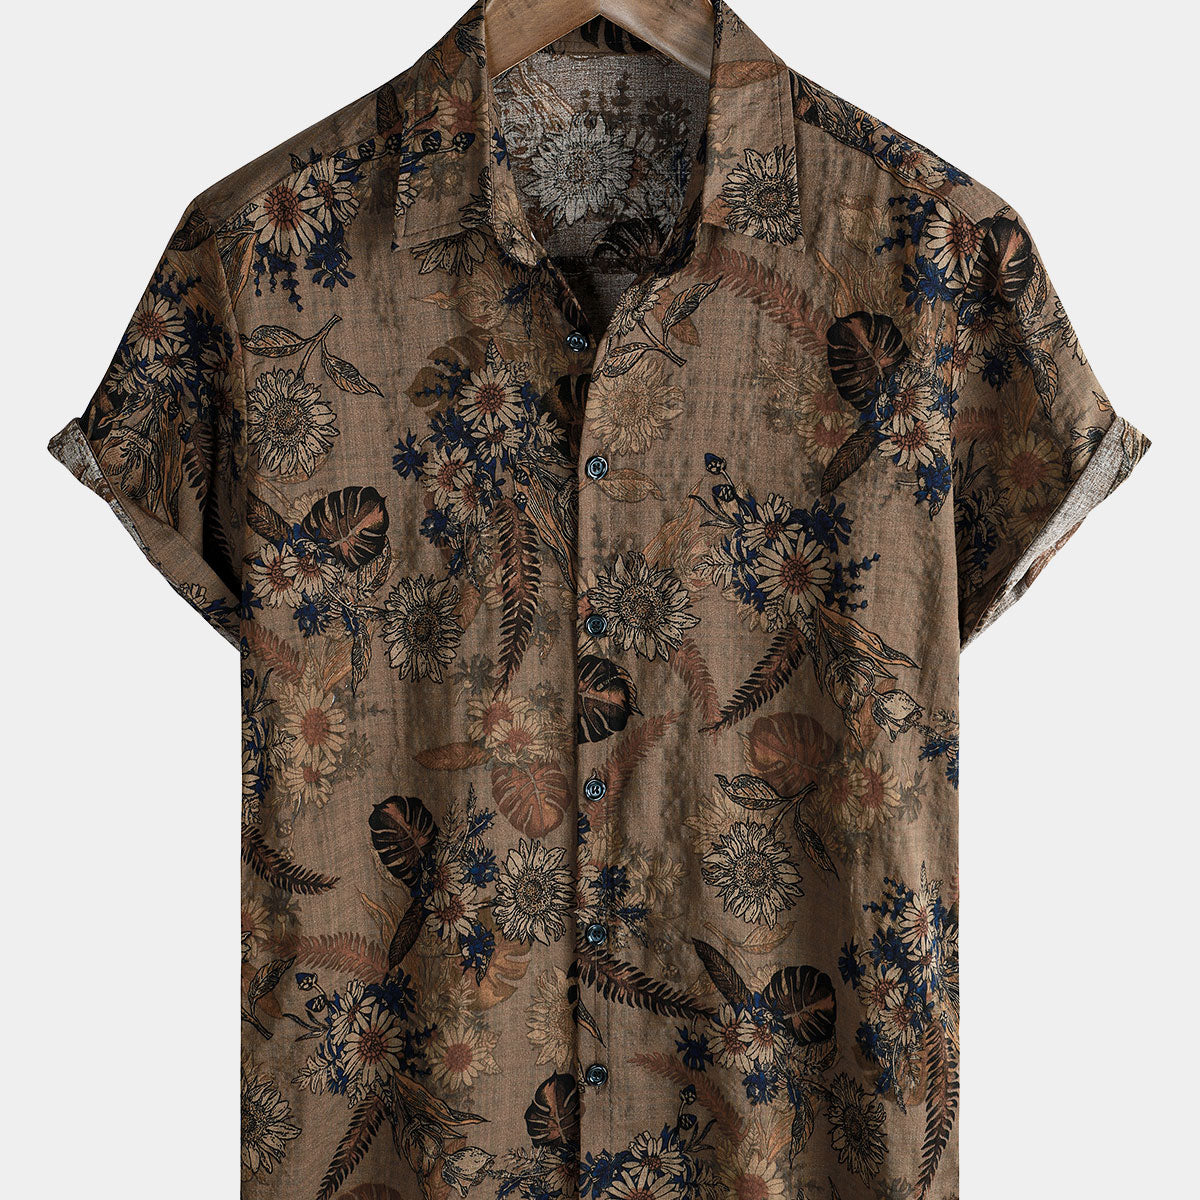 Men's Vintage Floral Vacation Summer Button Up Short Sleeve Shirt